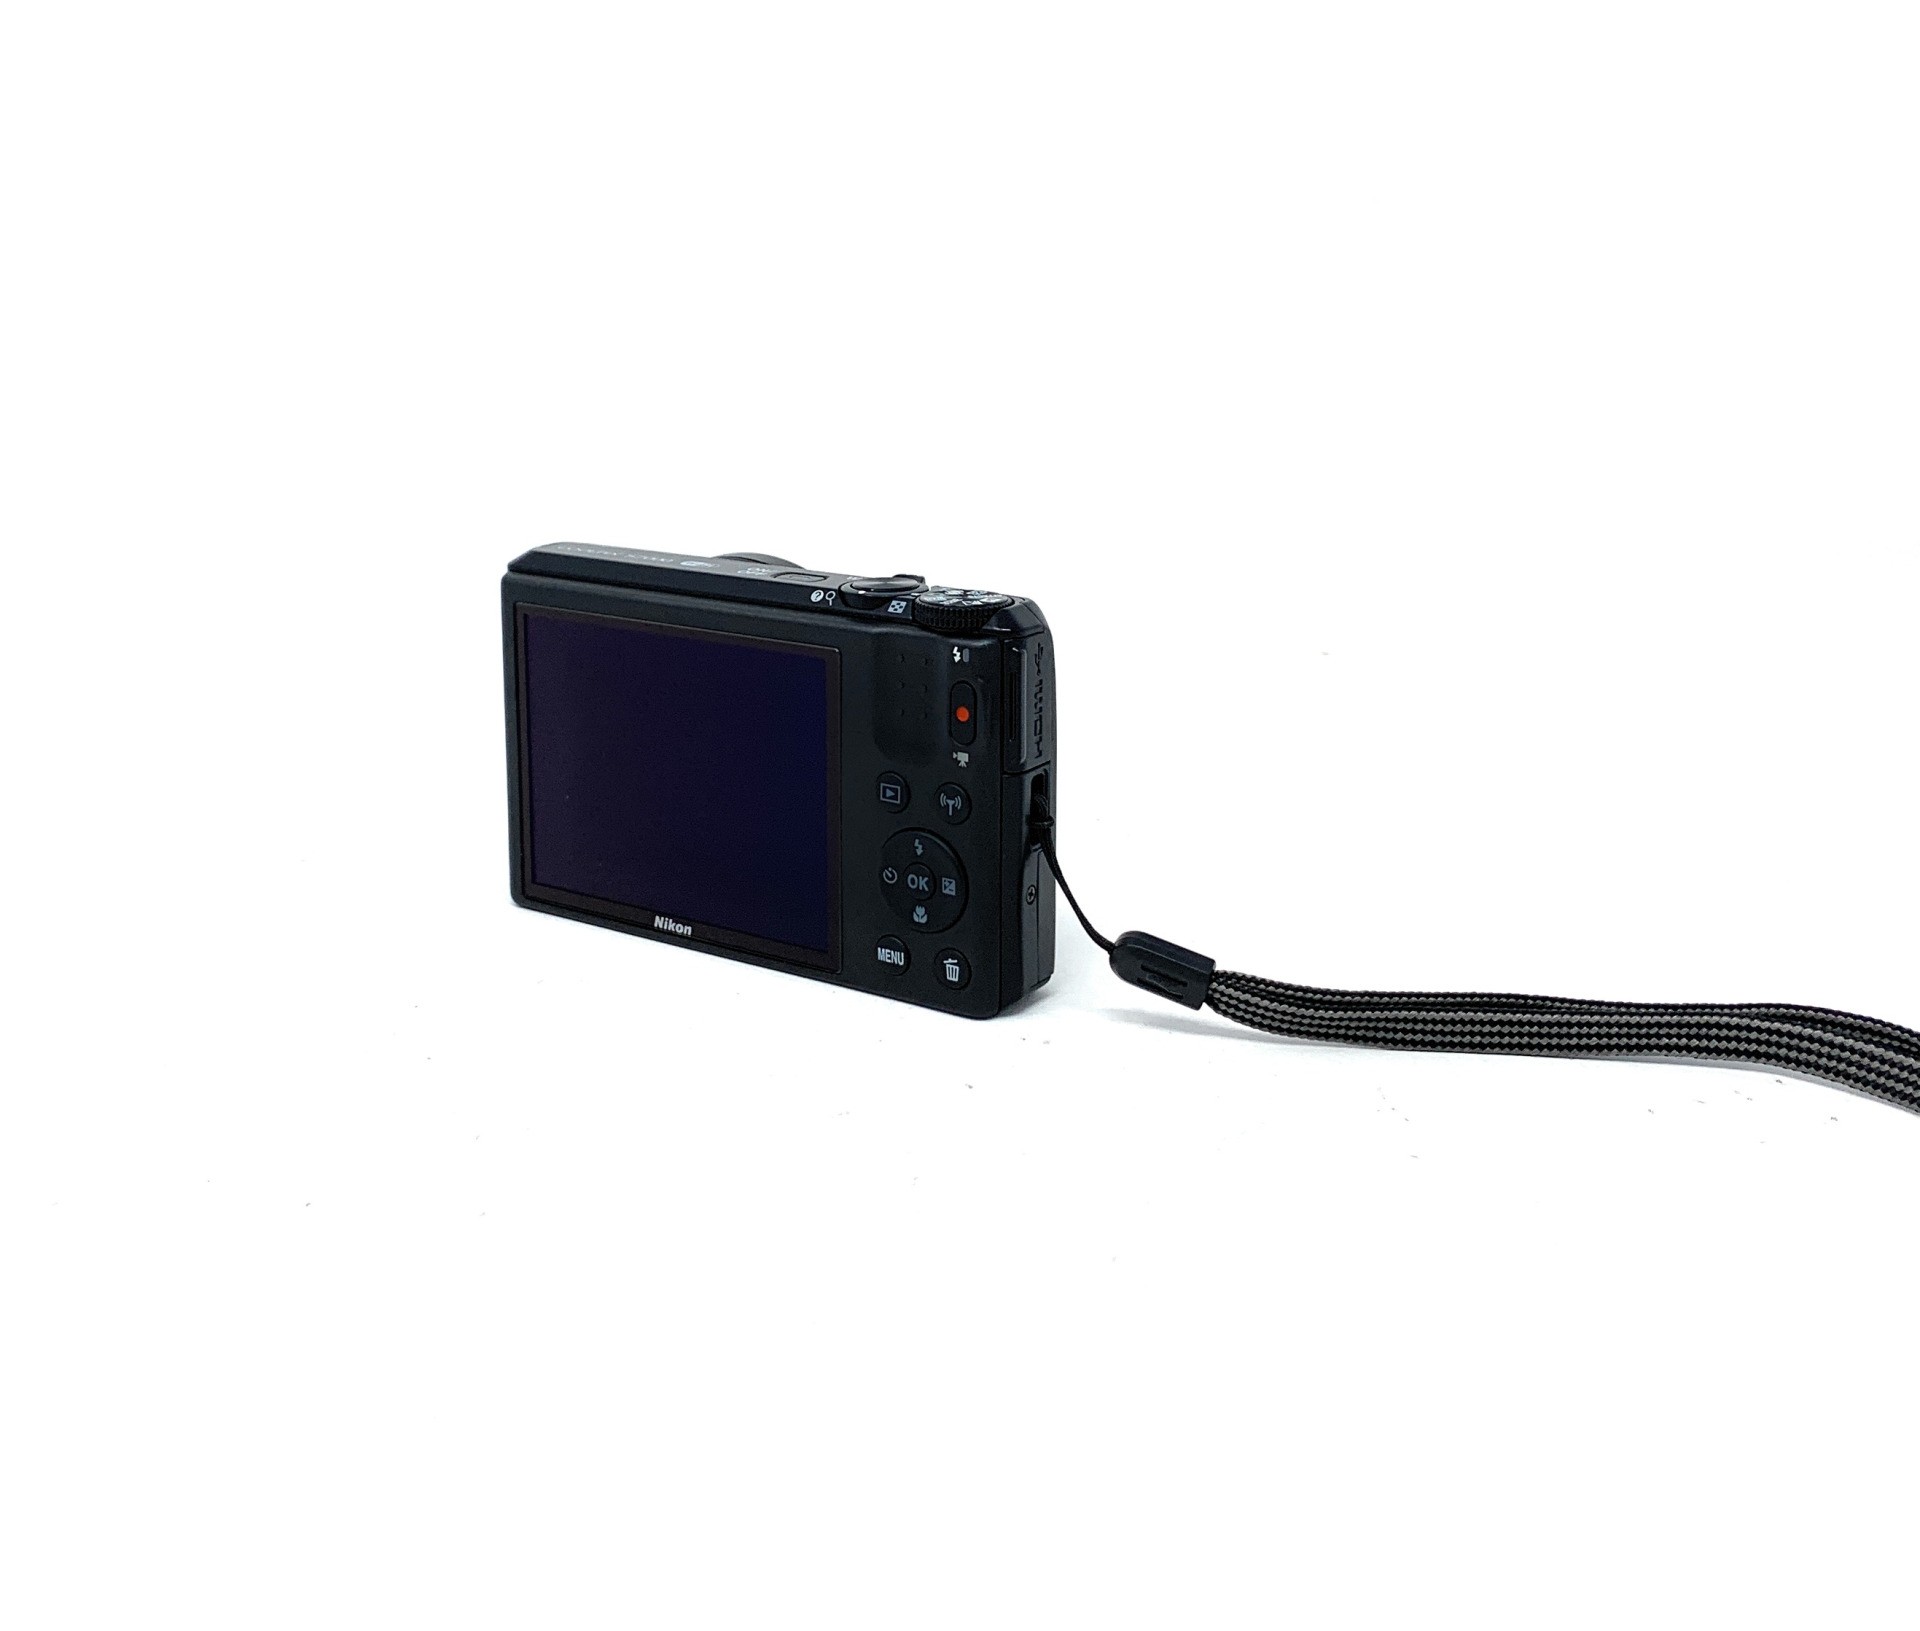 Nikon COOLPIX S7000 Compact Camera – Black – Buy Any Tech